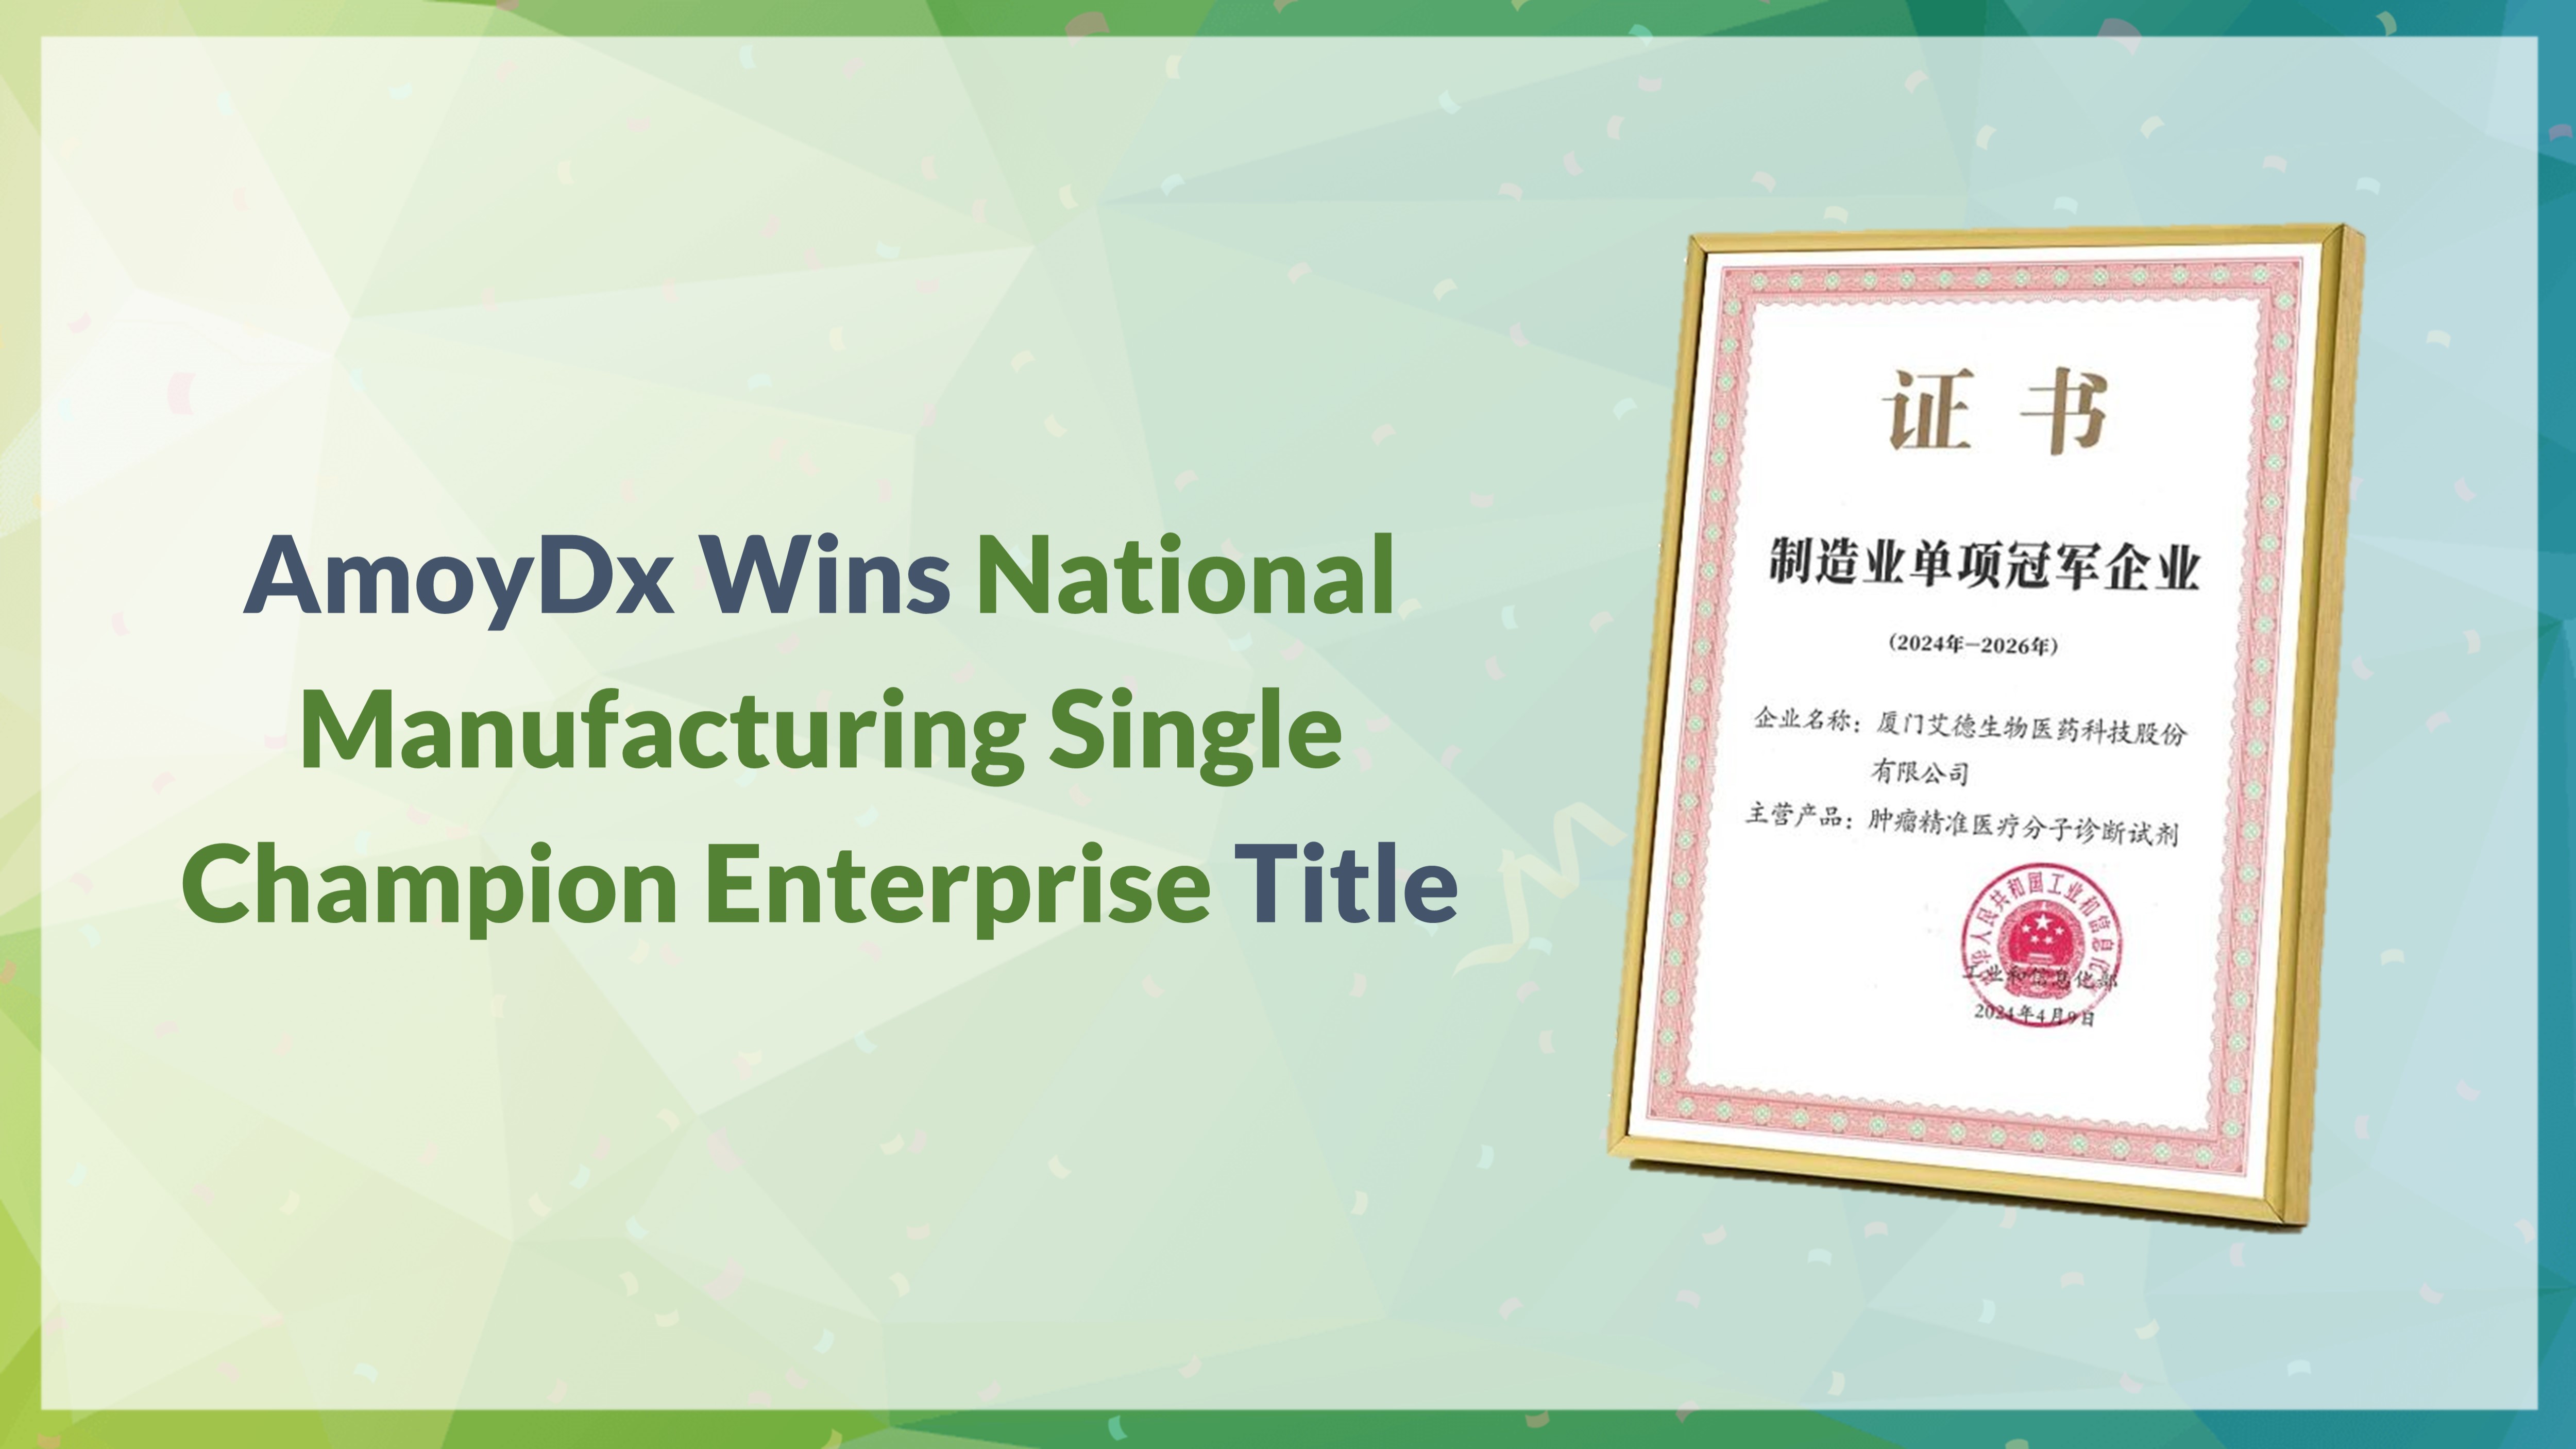 AmoyDx Wins National Manufacturing Single Champion Enterprise Title!